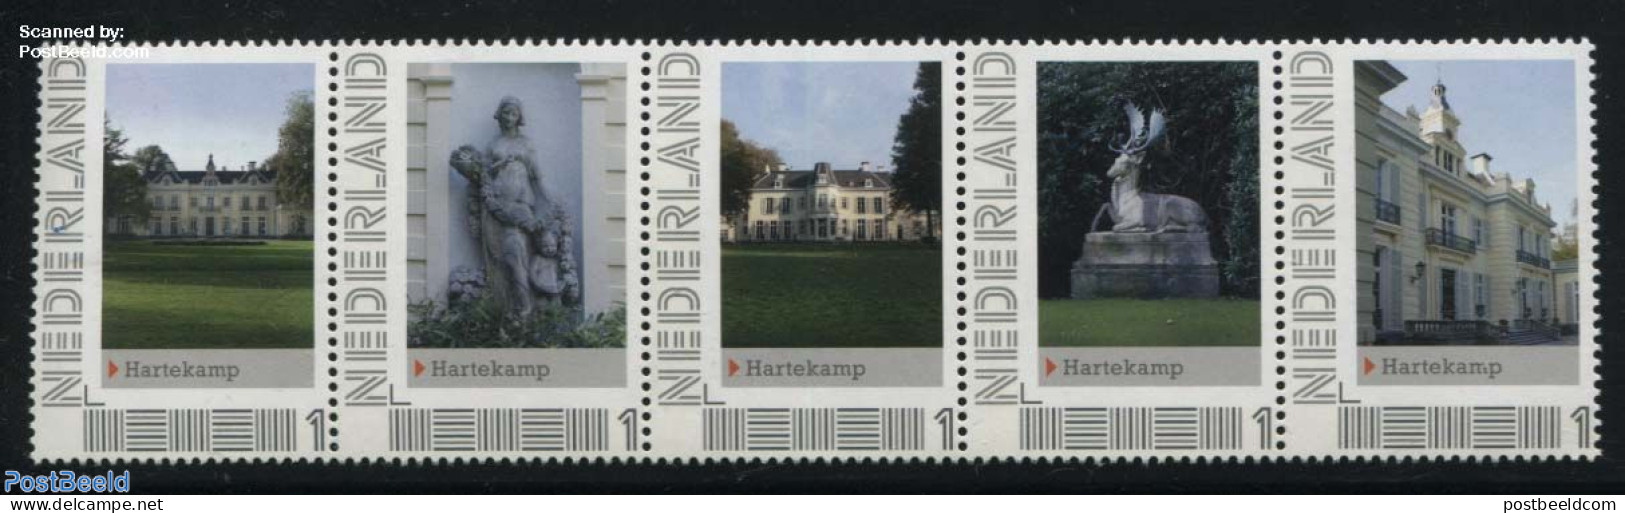 Netherlands - Personal Stamps TNT/PNL 2012 Hartekamp 5v [::::], Mint NH, Castles & Fortifications - Sculpture - Schlösser U. Burgen